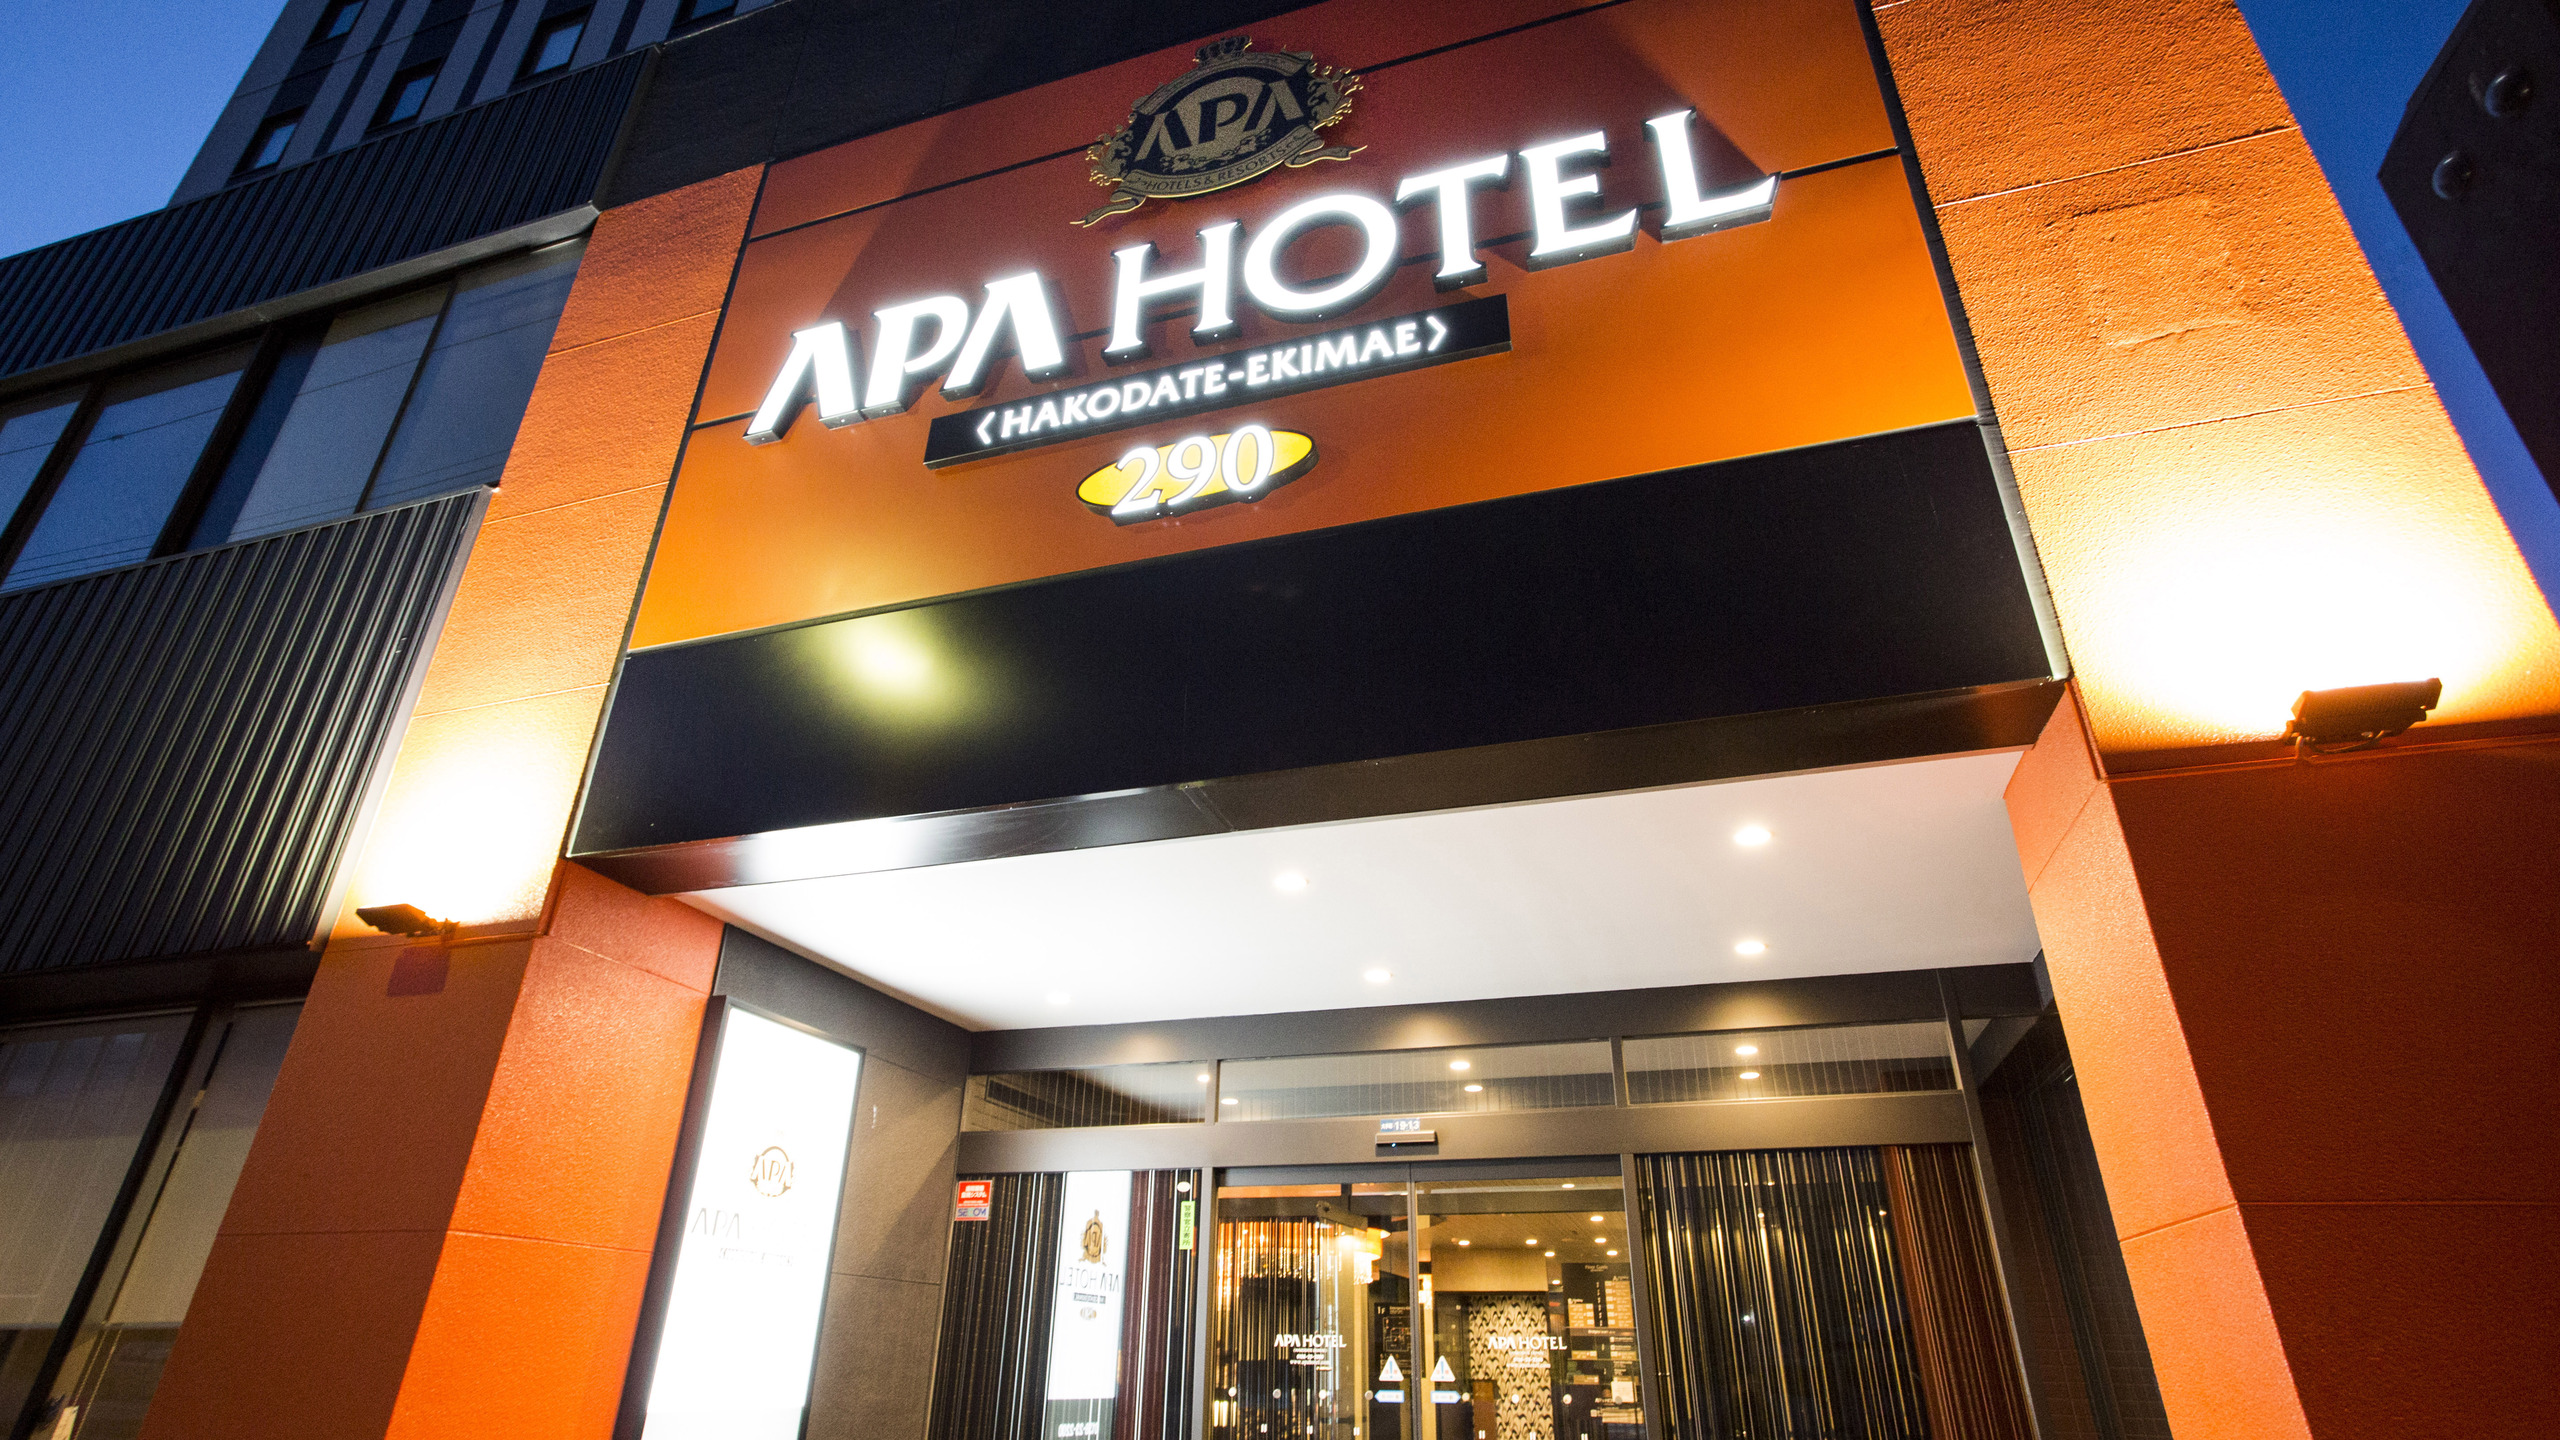 APA Hotel <Hakodate-Ekimae>